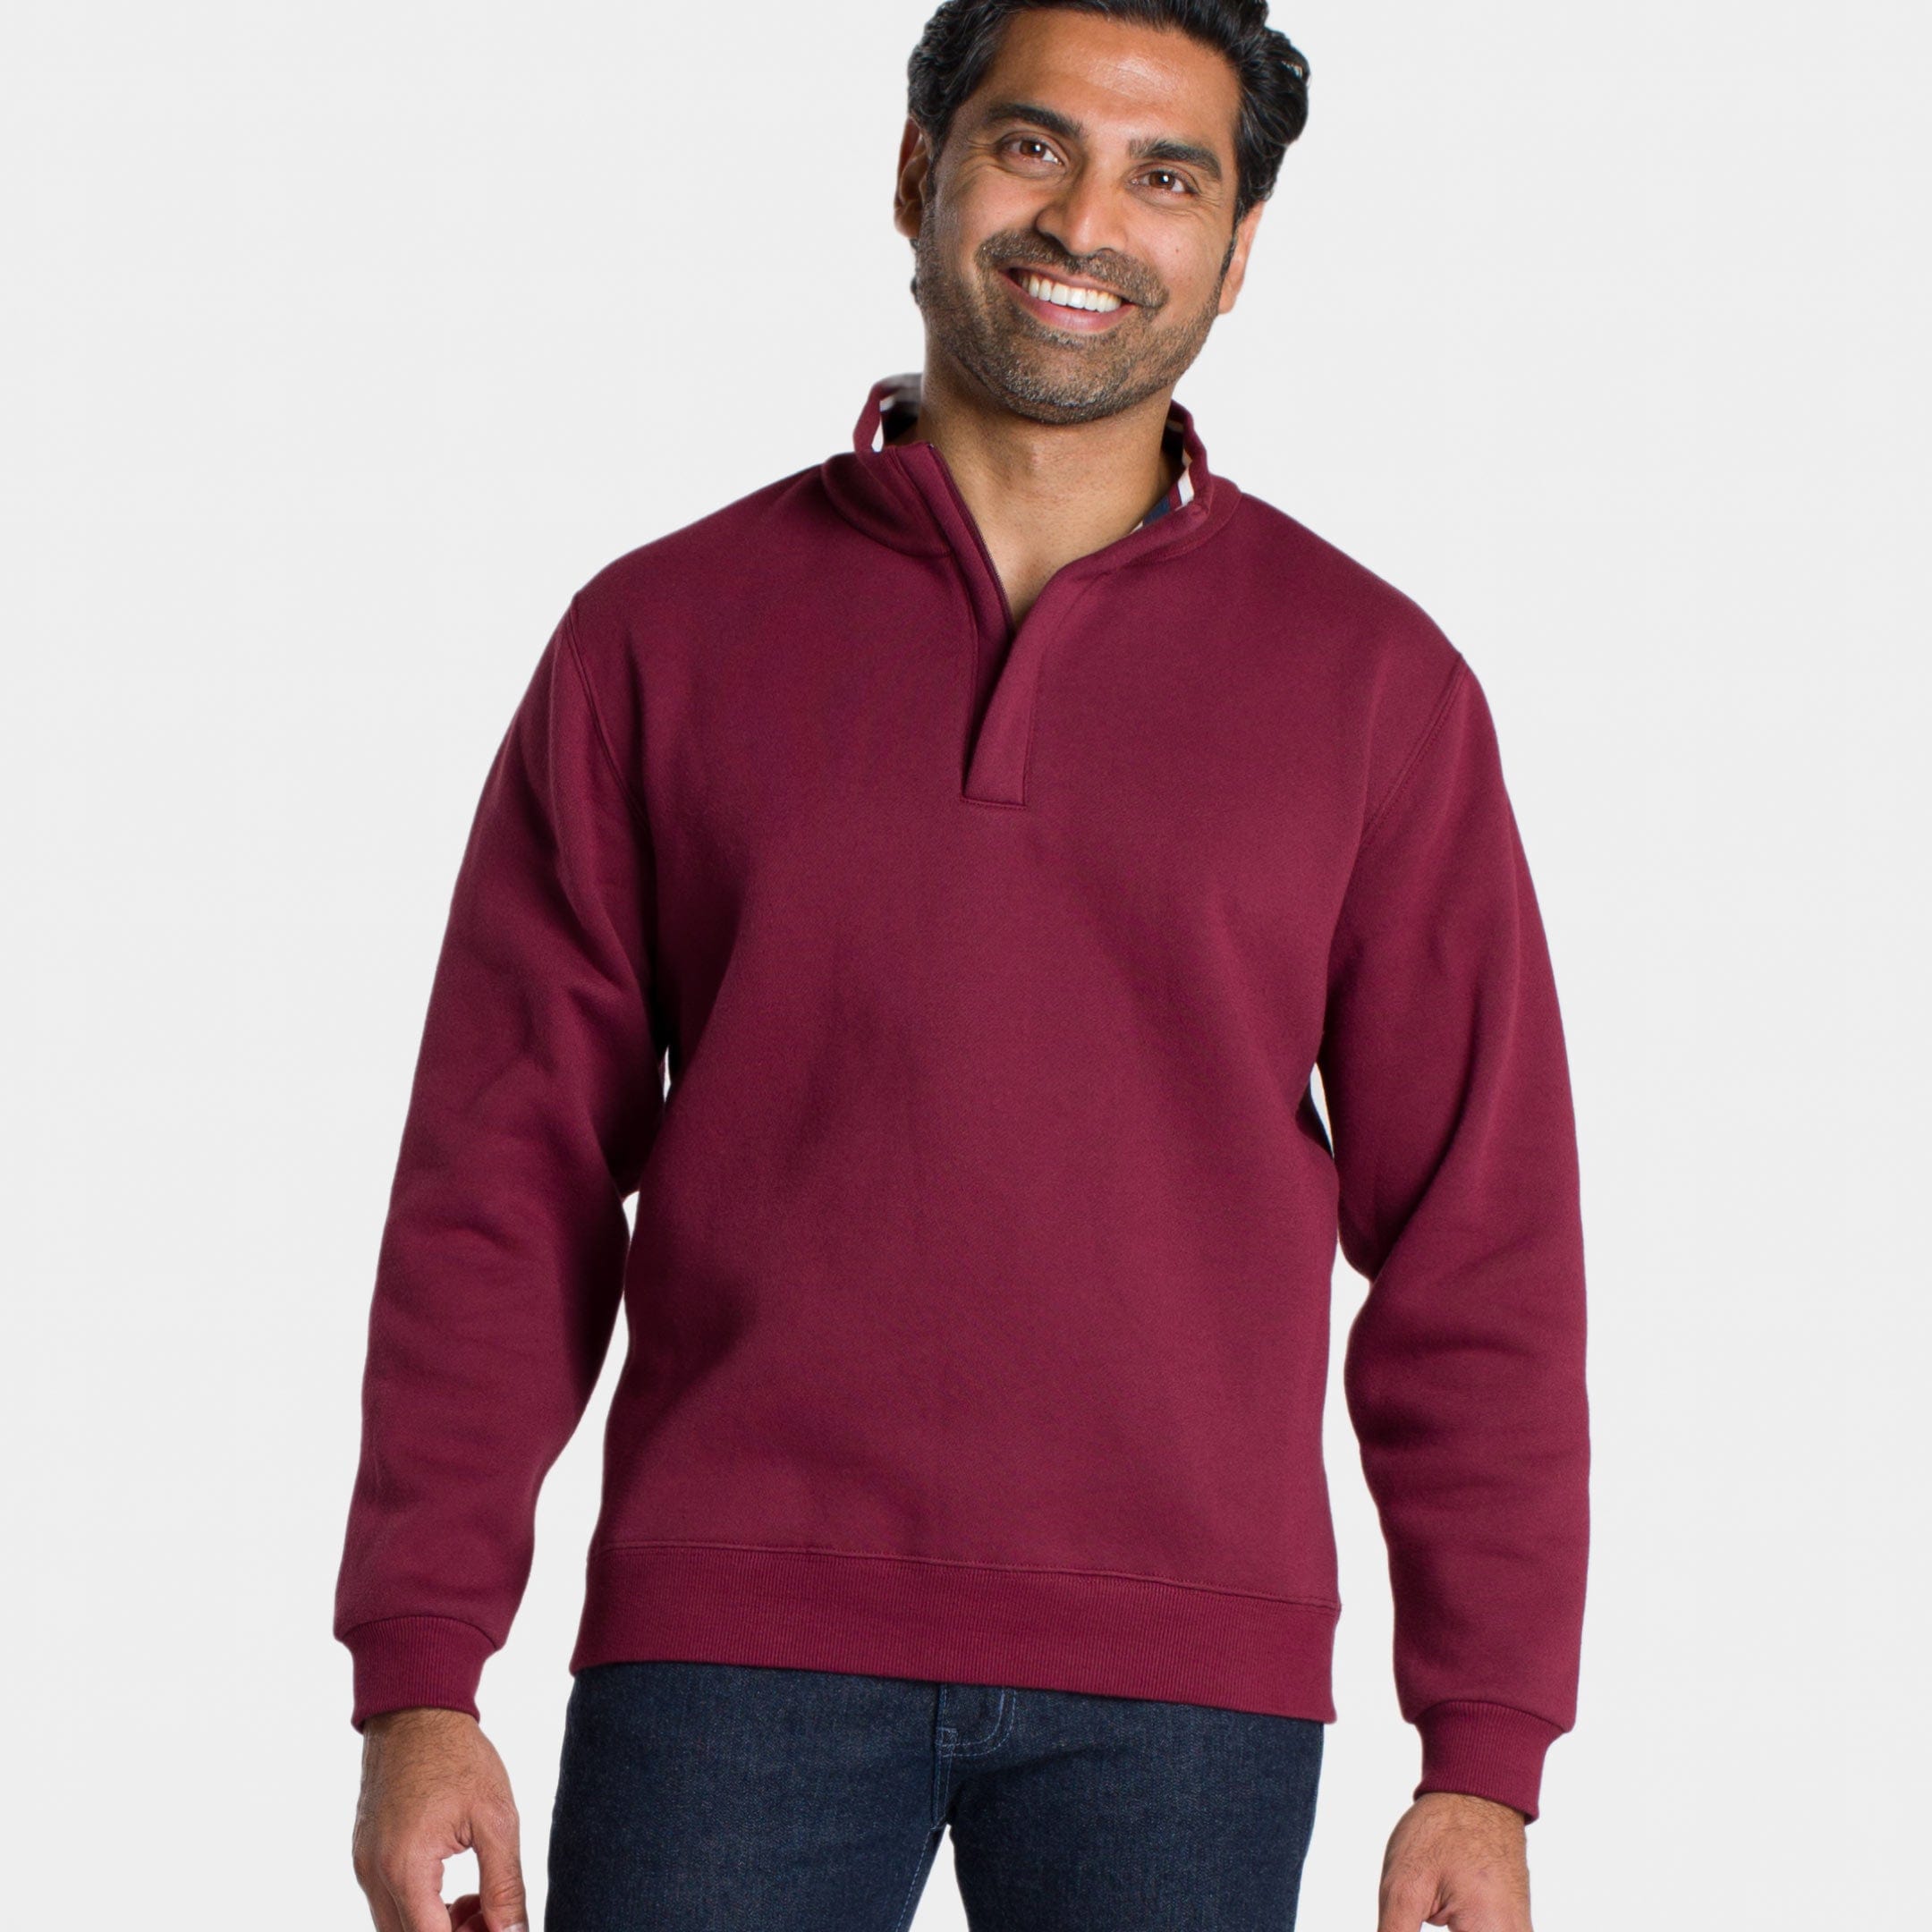 Ash & Erie Burgundy Quarter-Zip Sweatshirt for Short Men